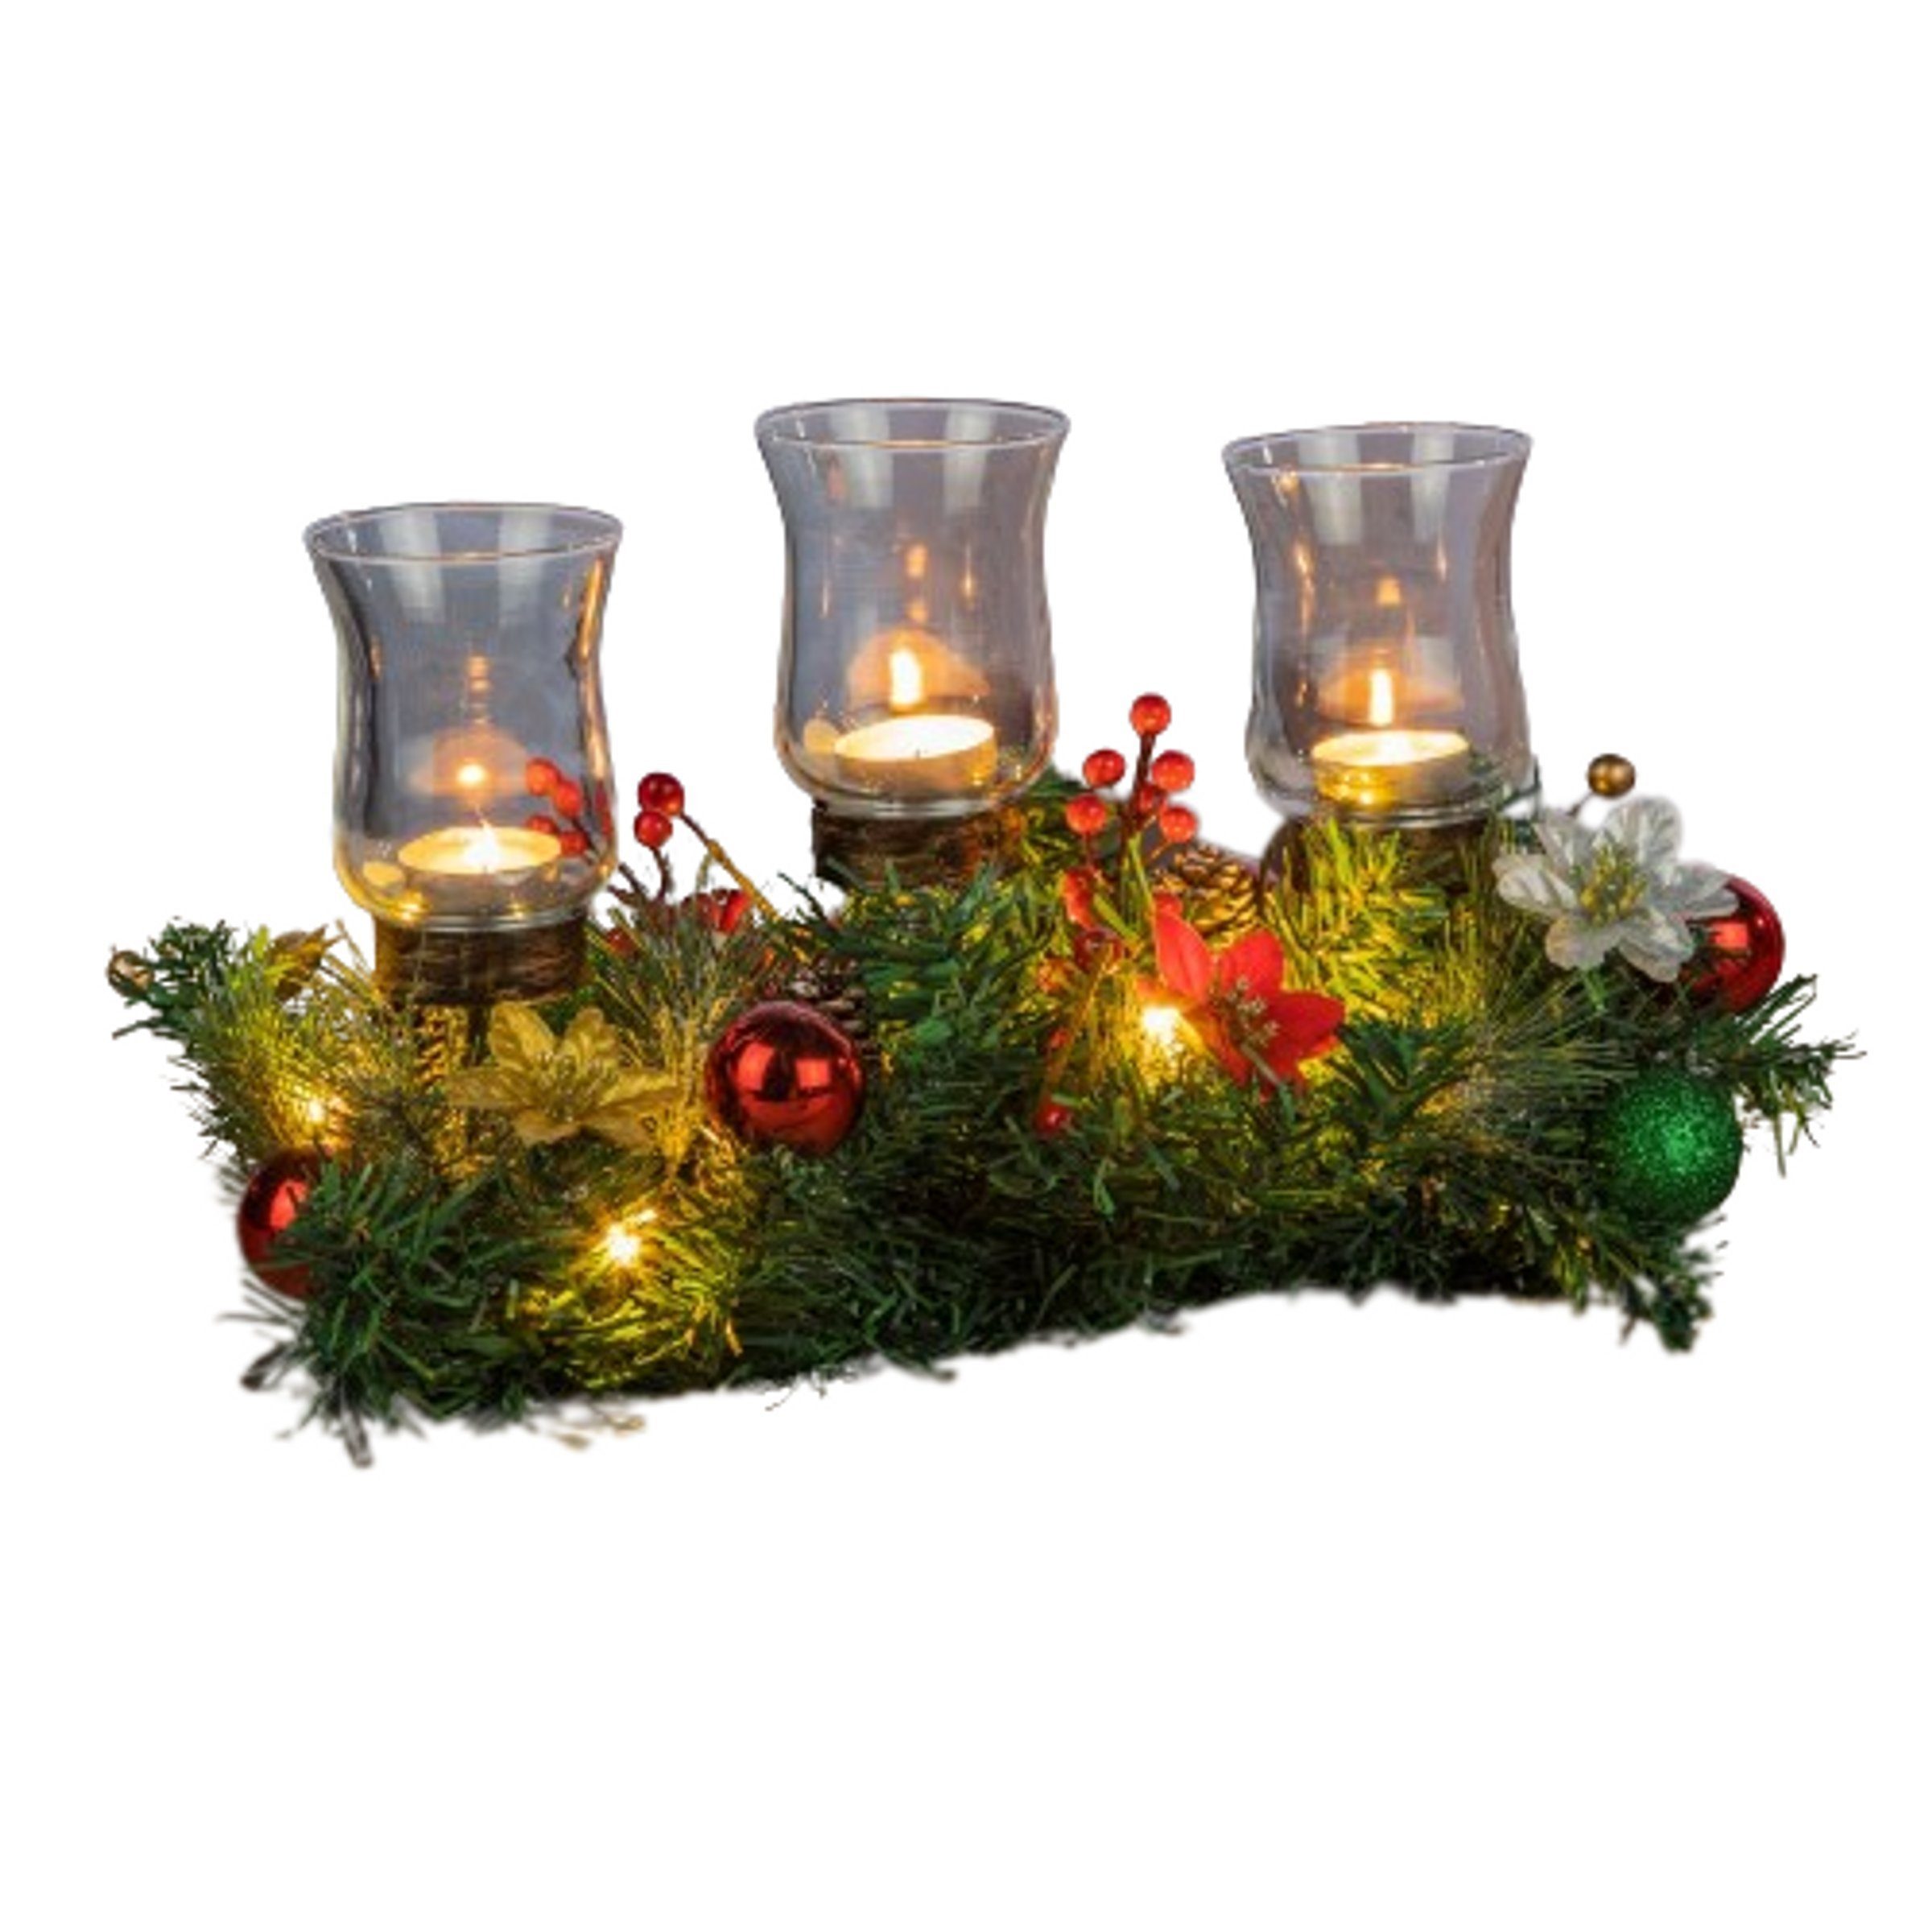 Kerzenhalter Kerzenhalter LED Gravidus Weihnachten 6 3 Kerzen